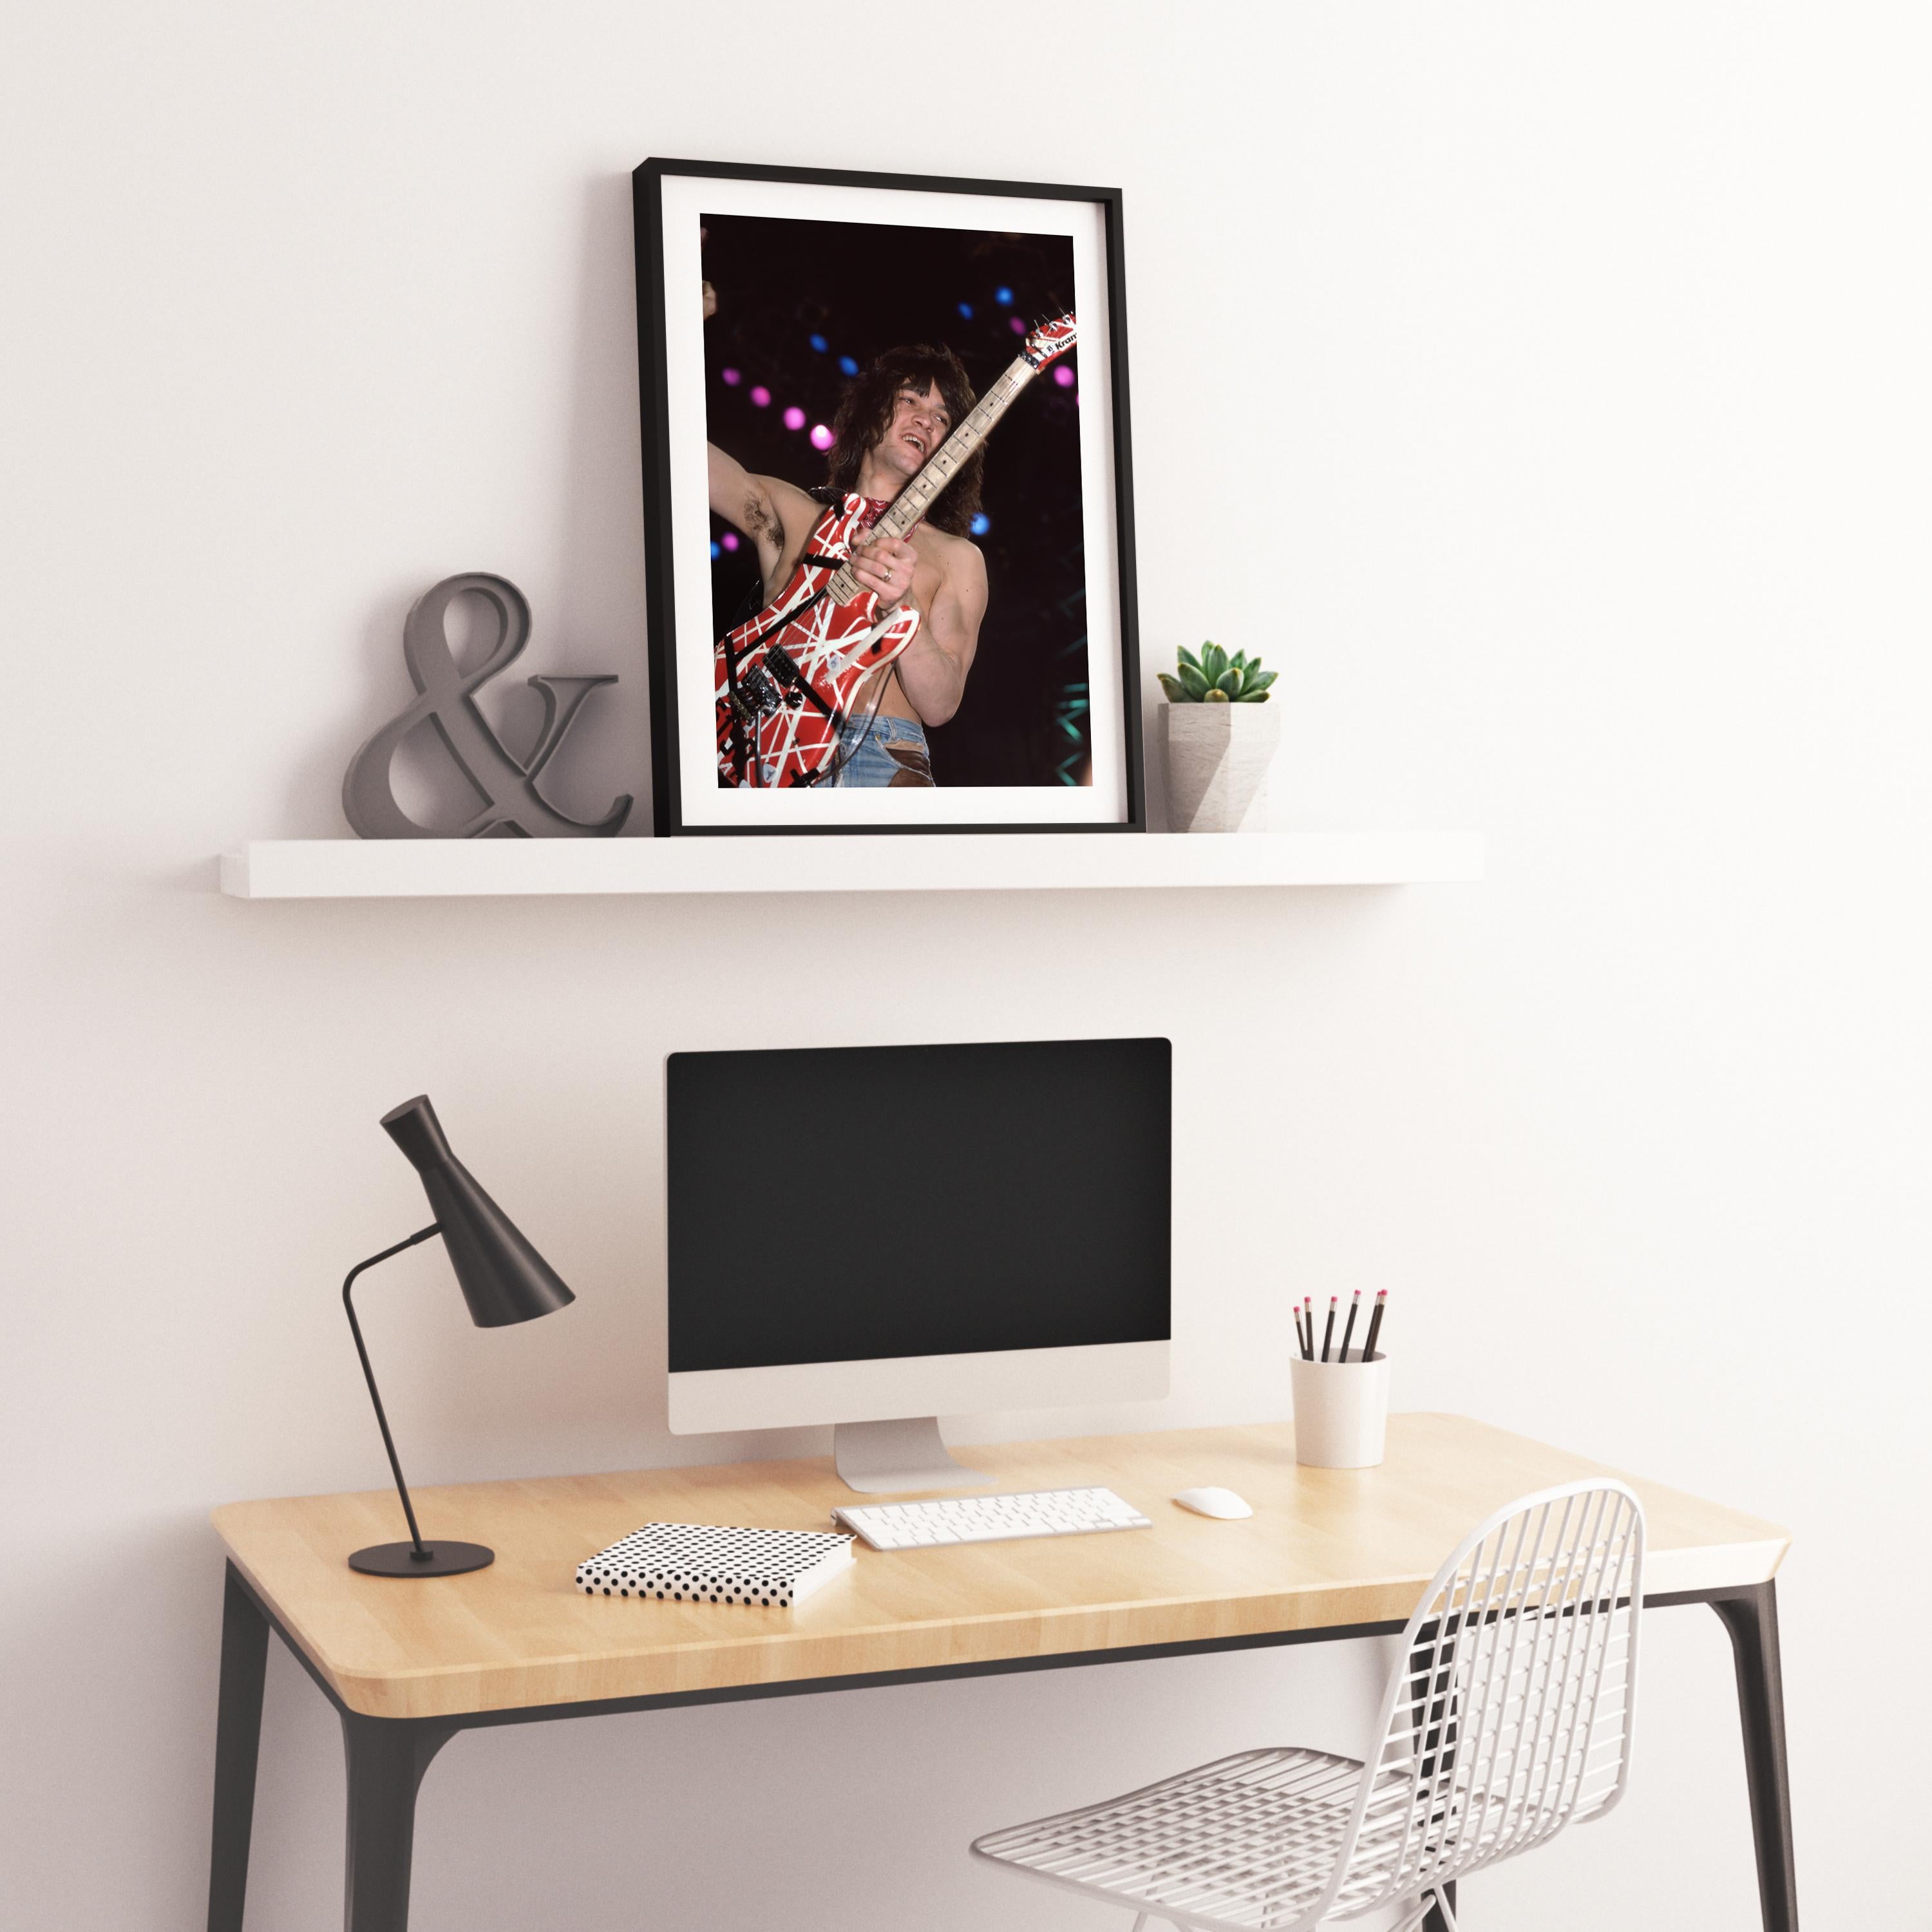 Eddie Van Halen Smiling on Stage Fine Art Print - Black Portrait Photograph by Tony Defilippis